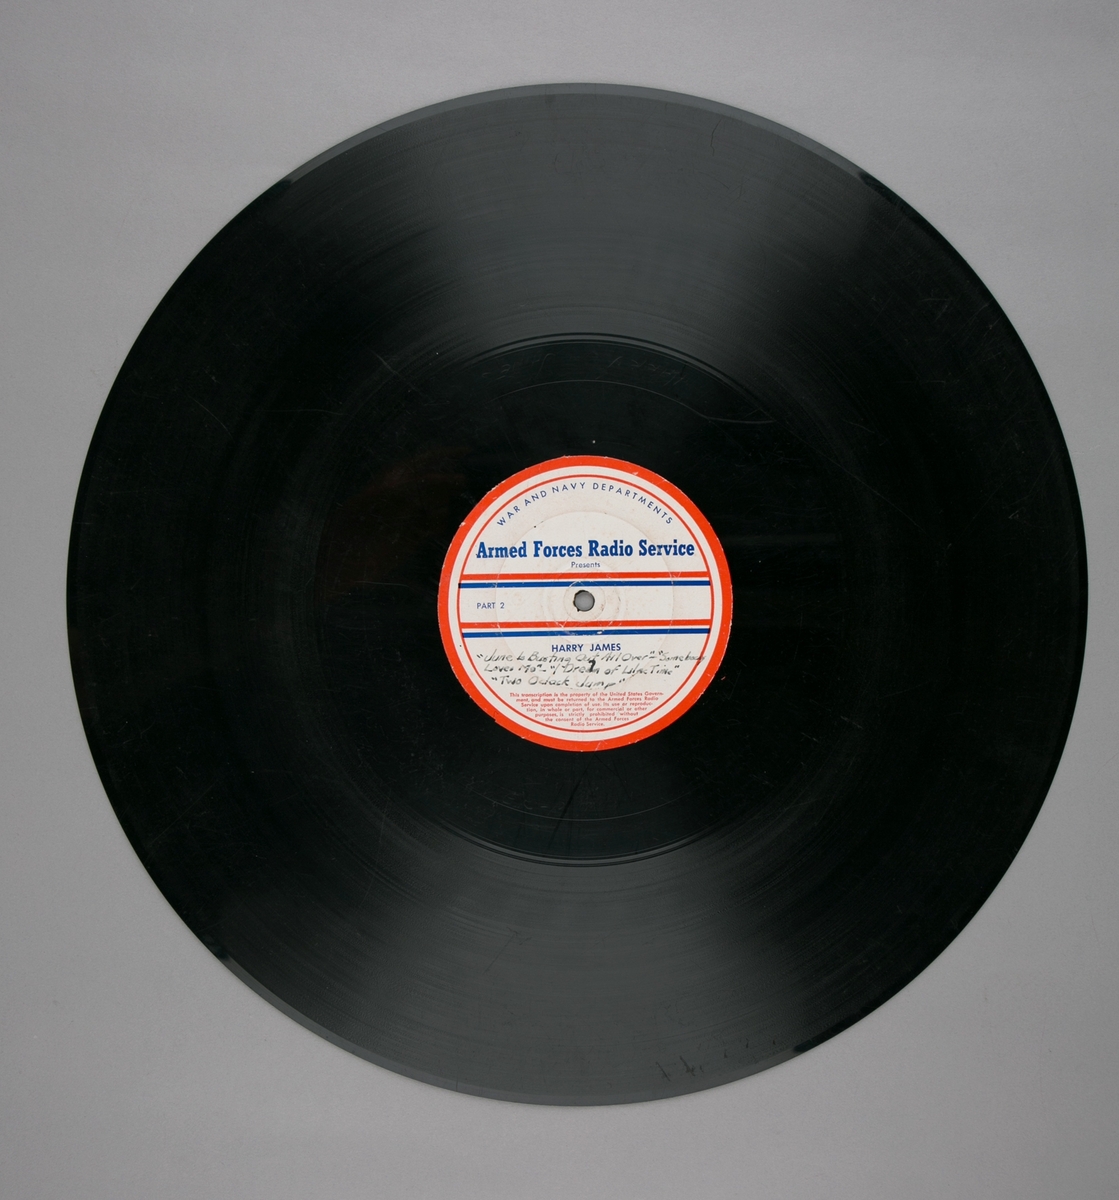 Grammofonplatesamling. LP-plate med tittel "Armed Forces Radio Service" utgitt av War and Navy Departements. Plate i svart vinyl spilles på platespiller med 33 1/3 omdreininger i minuttet (33-plate).